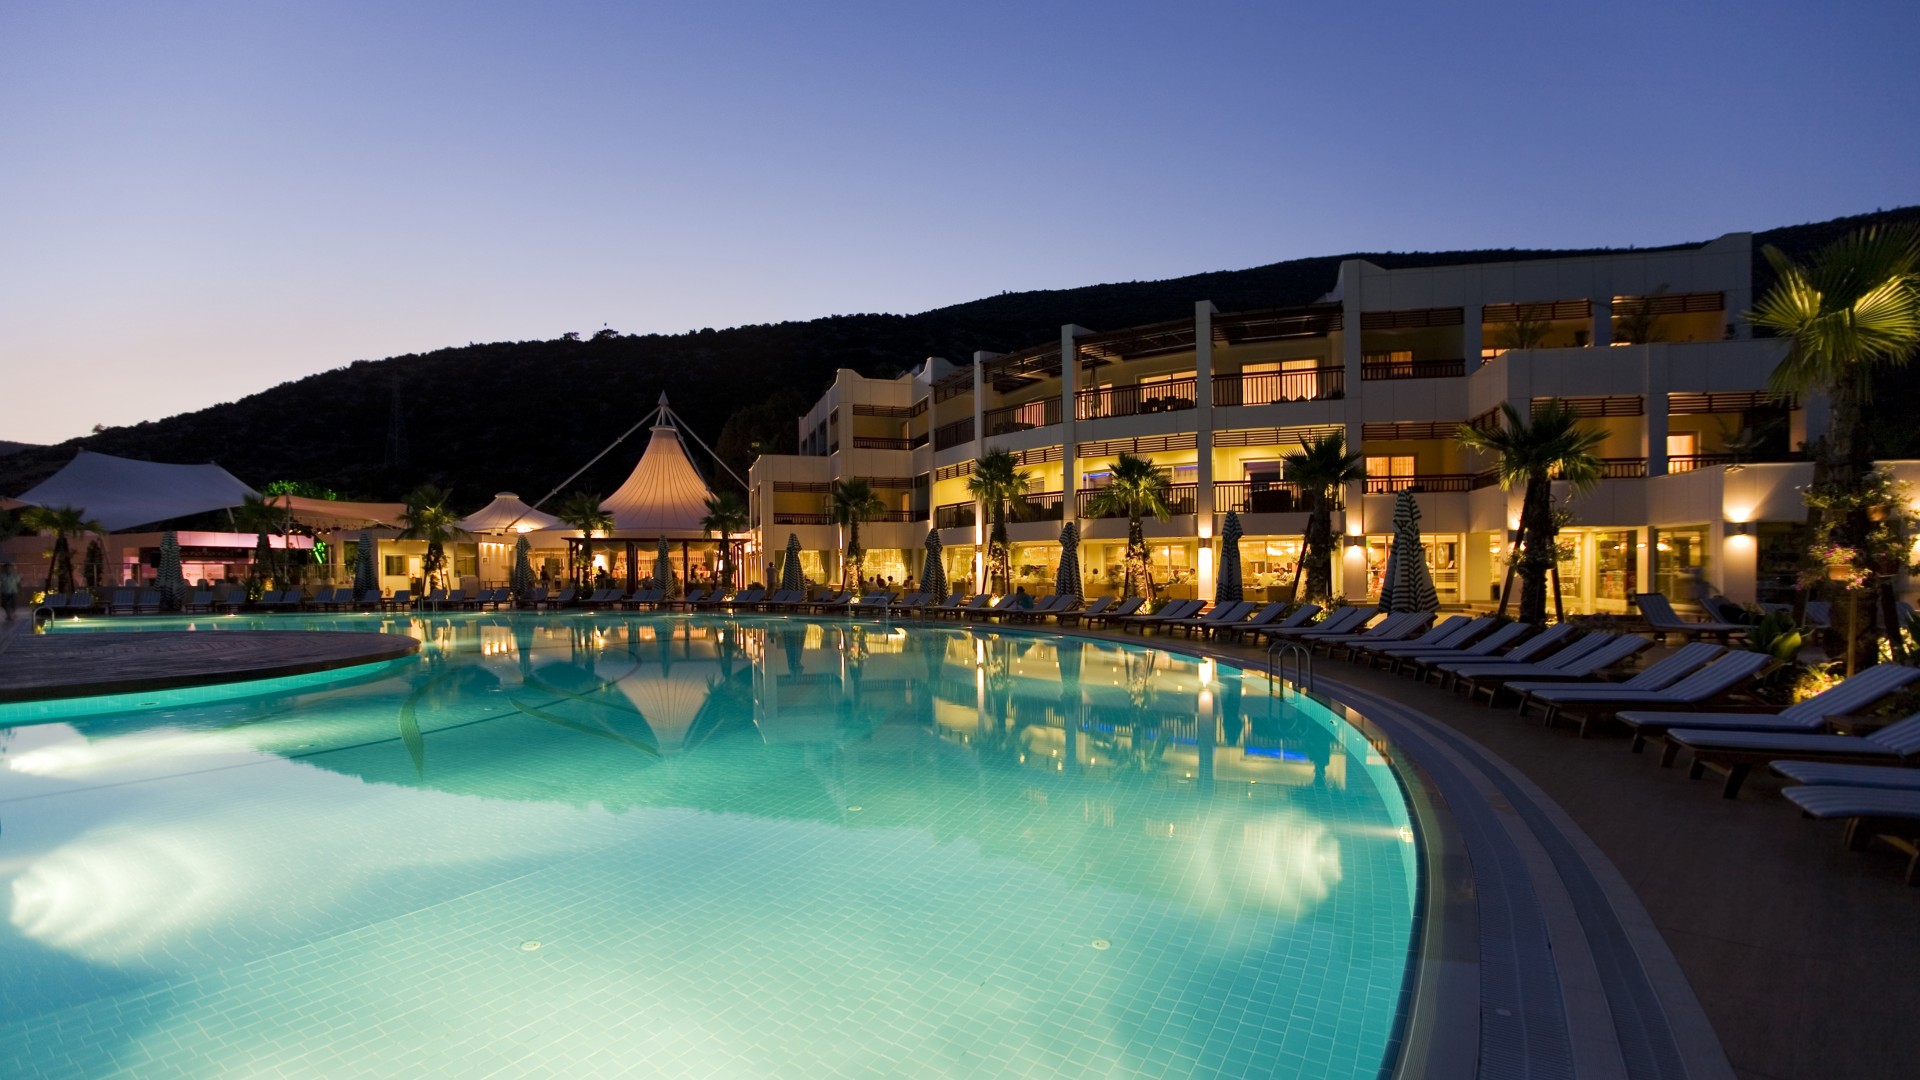 Latanya Bodrum Beach Resort, Turkey, hotel, pool, twilight, light, sunbed, travel, vacation, booking, resort, reflection (horizontal)